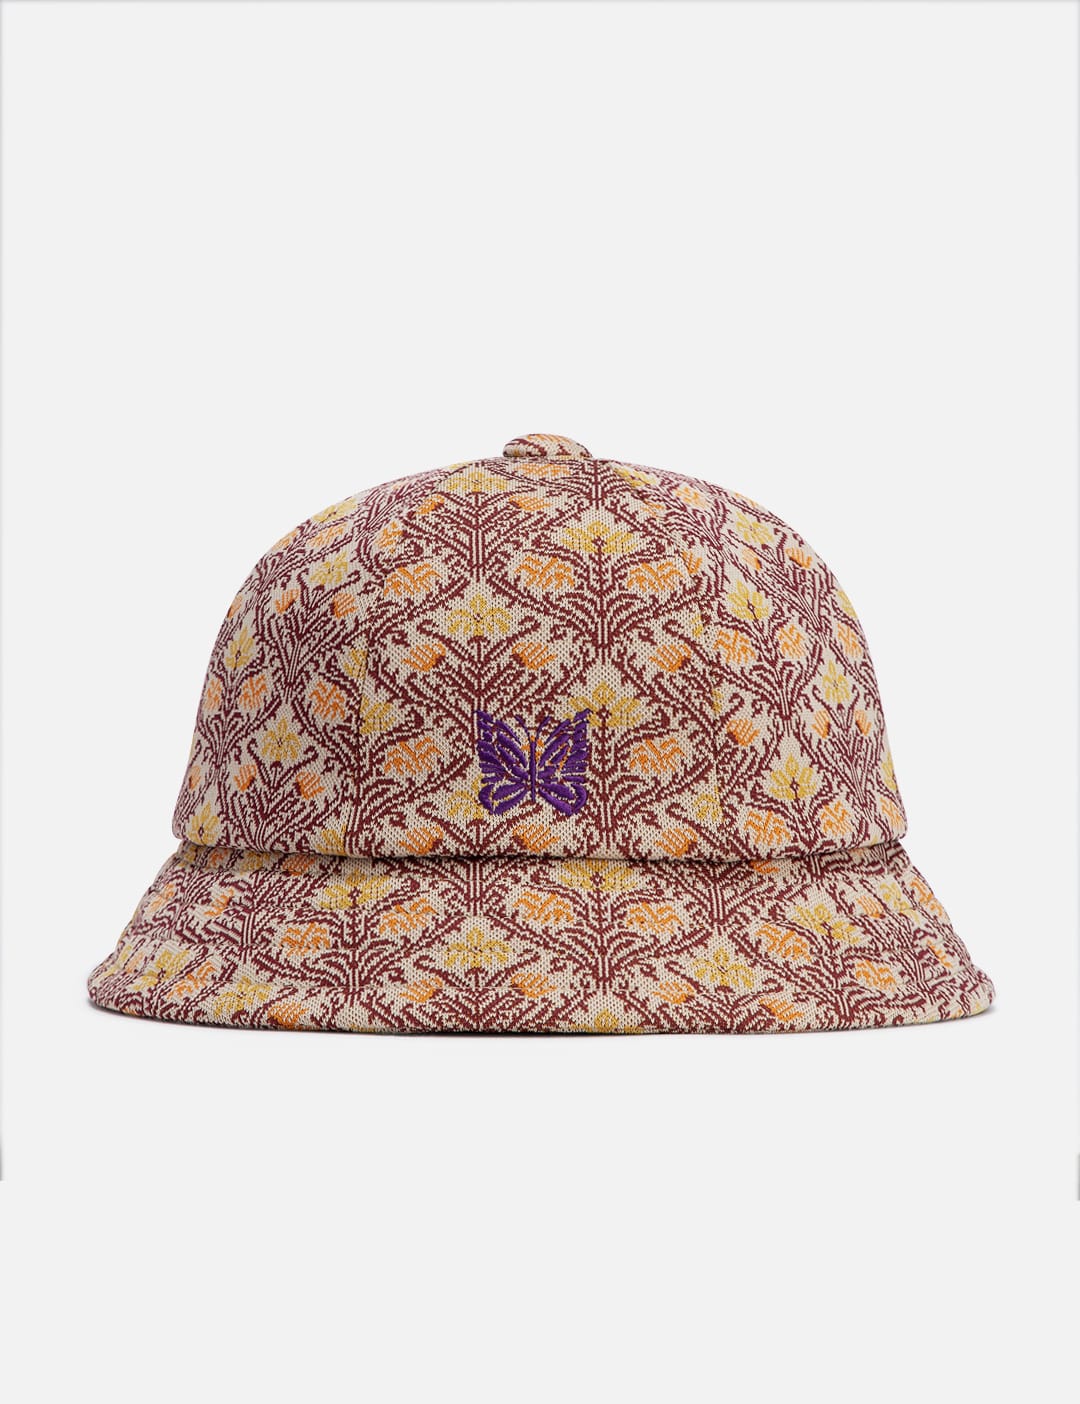 NEEDLES / Bermuda Hat Jacquard ハット 帽子 メンズ 春新作の